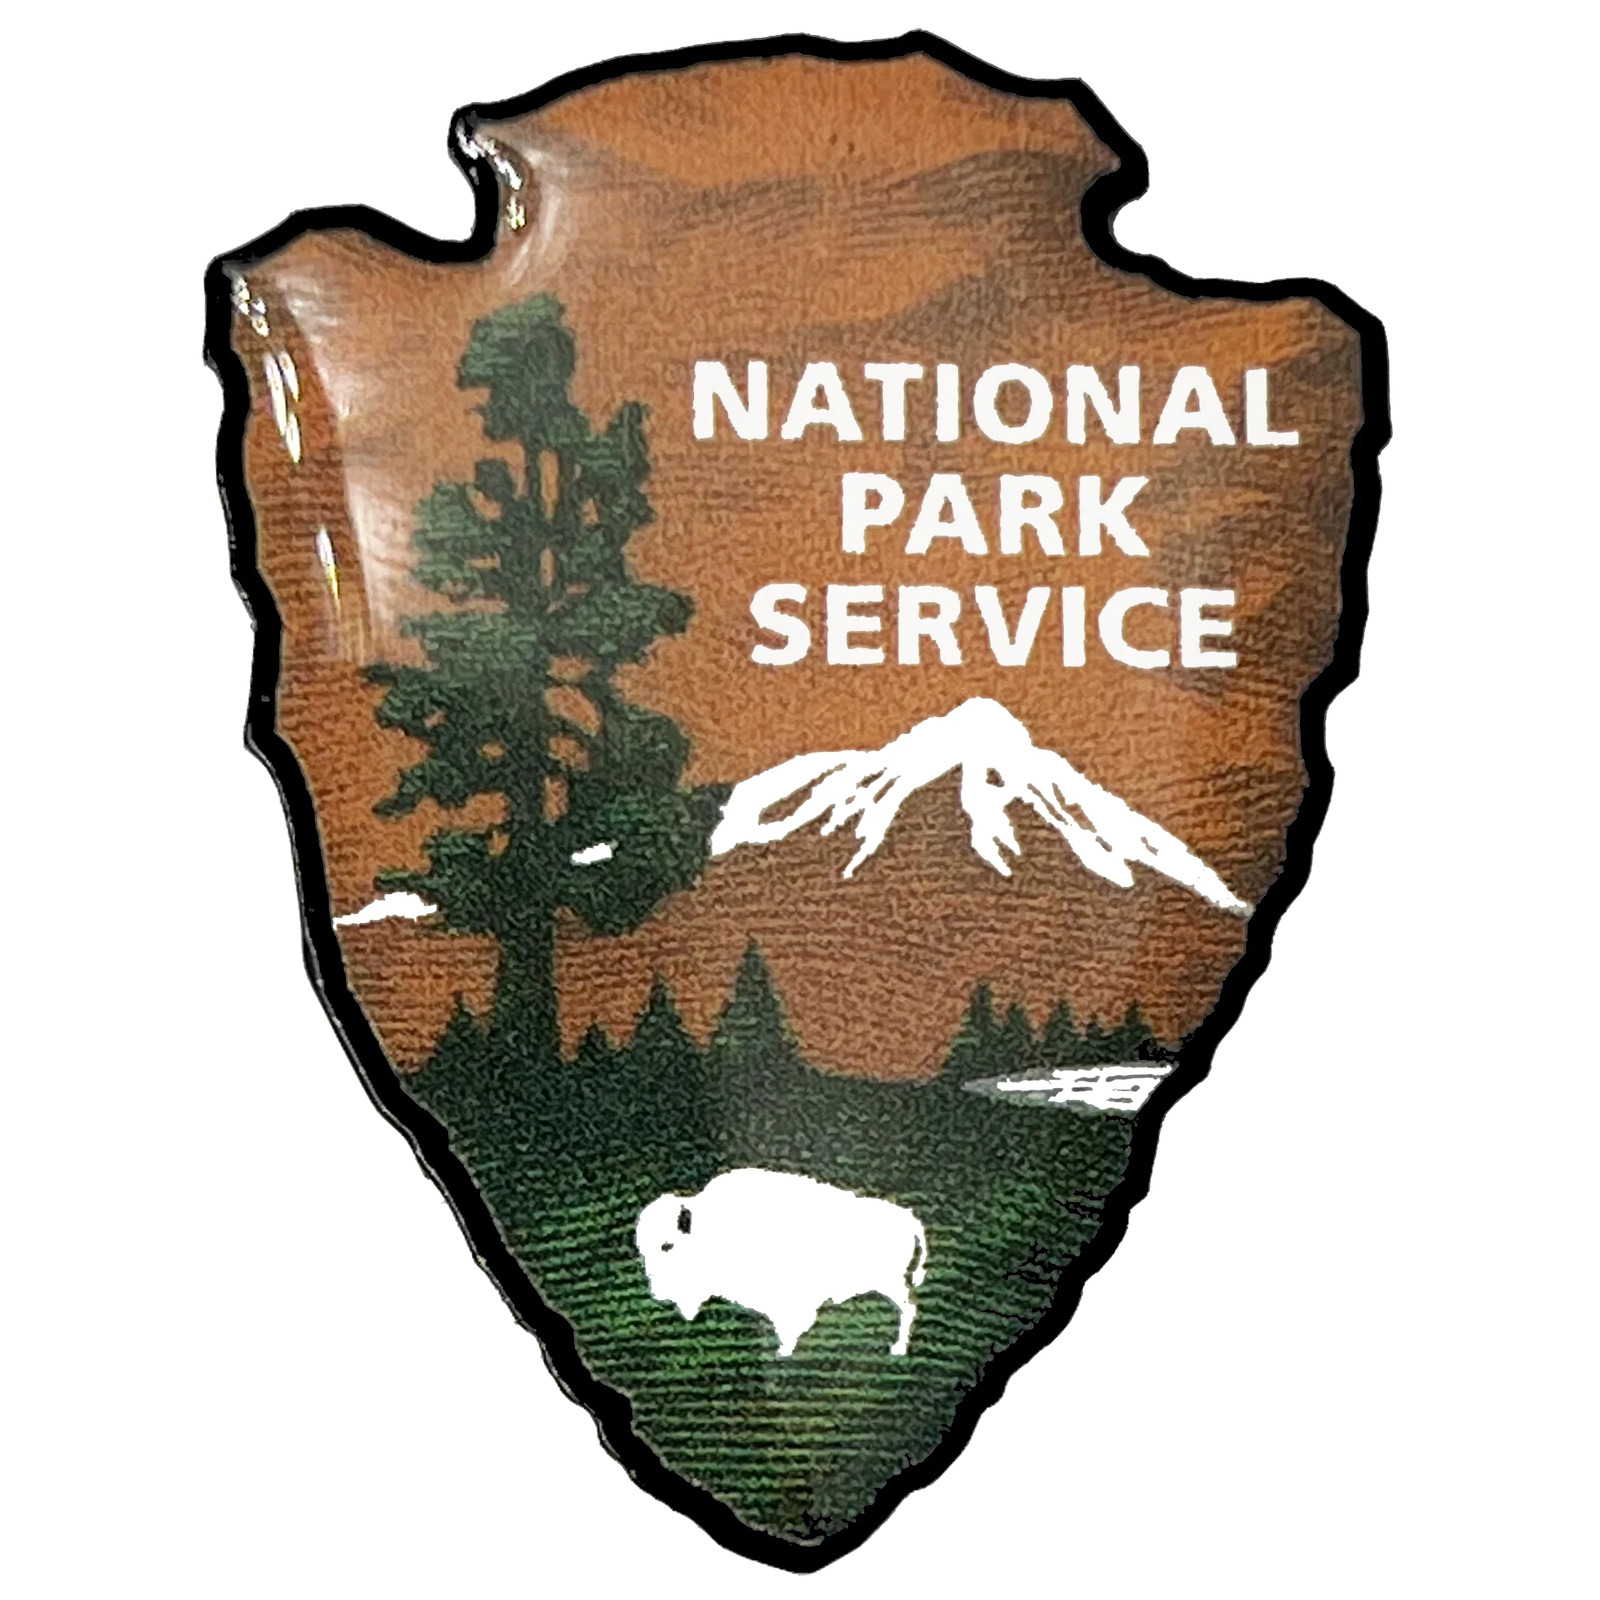 JJ-014 National Park Service Pin NPS US Department of the Interior Law Enforceme